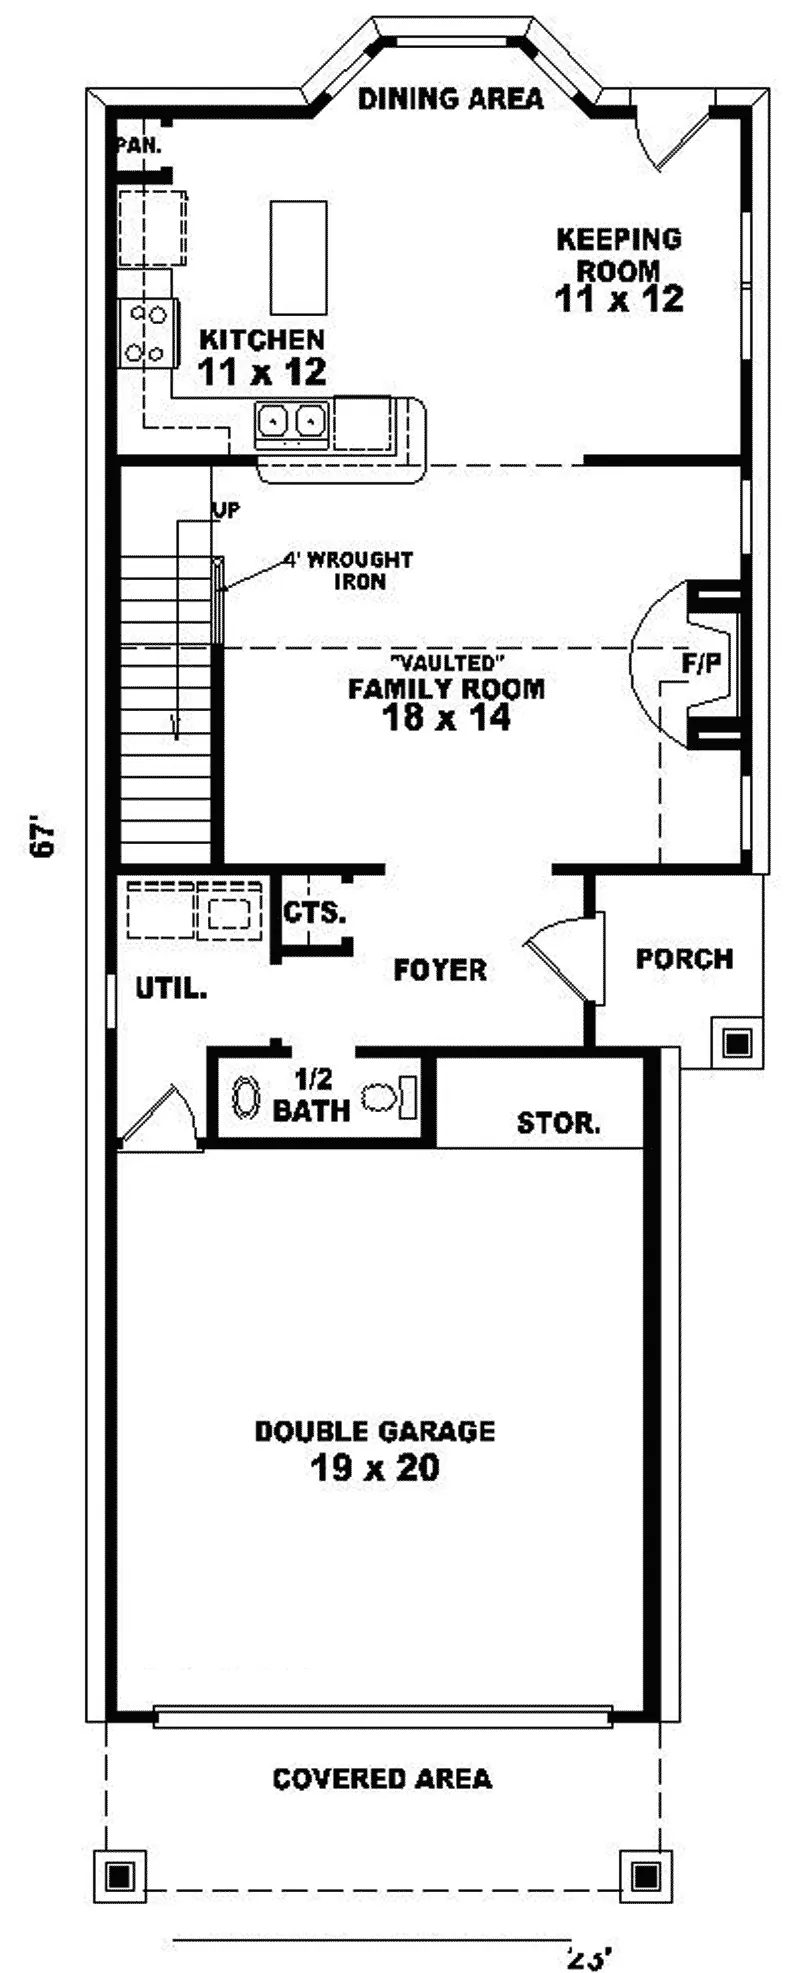 Beach & Coastal House Plan First Floor - Letitia Bay Coastal Home 087D-0070 - Shop House Plans and More